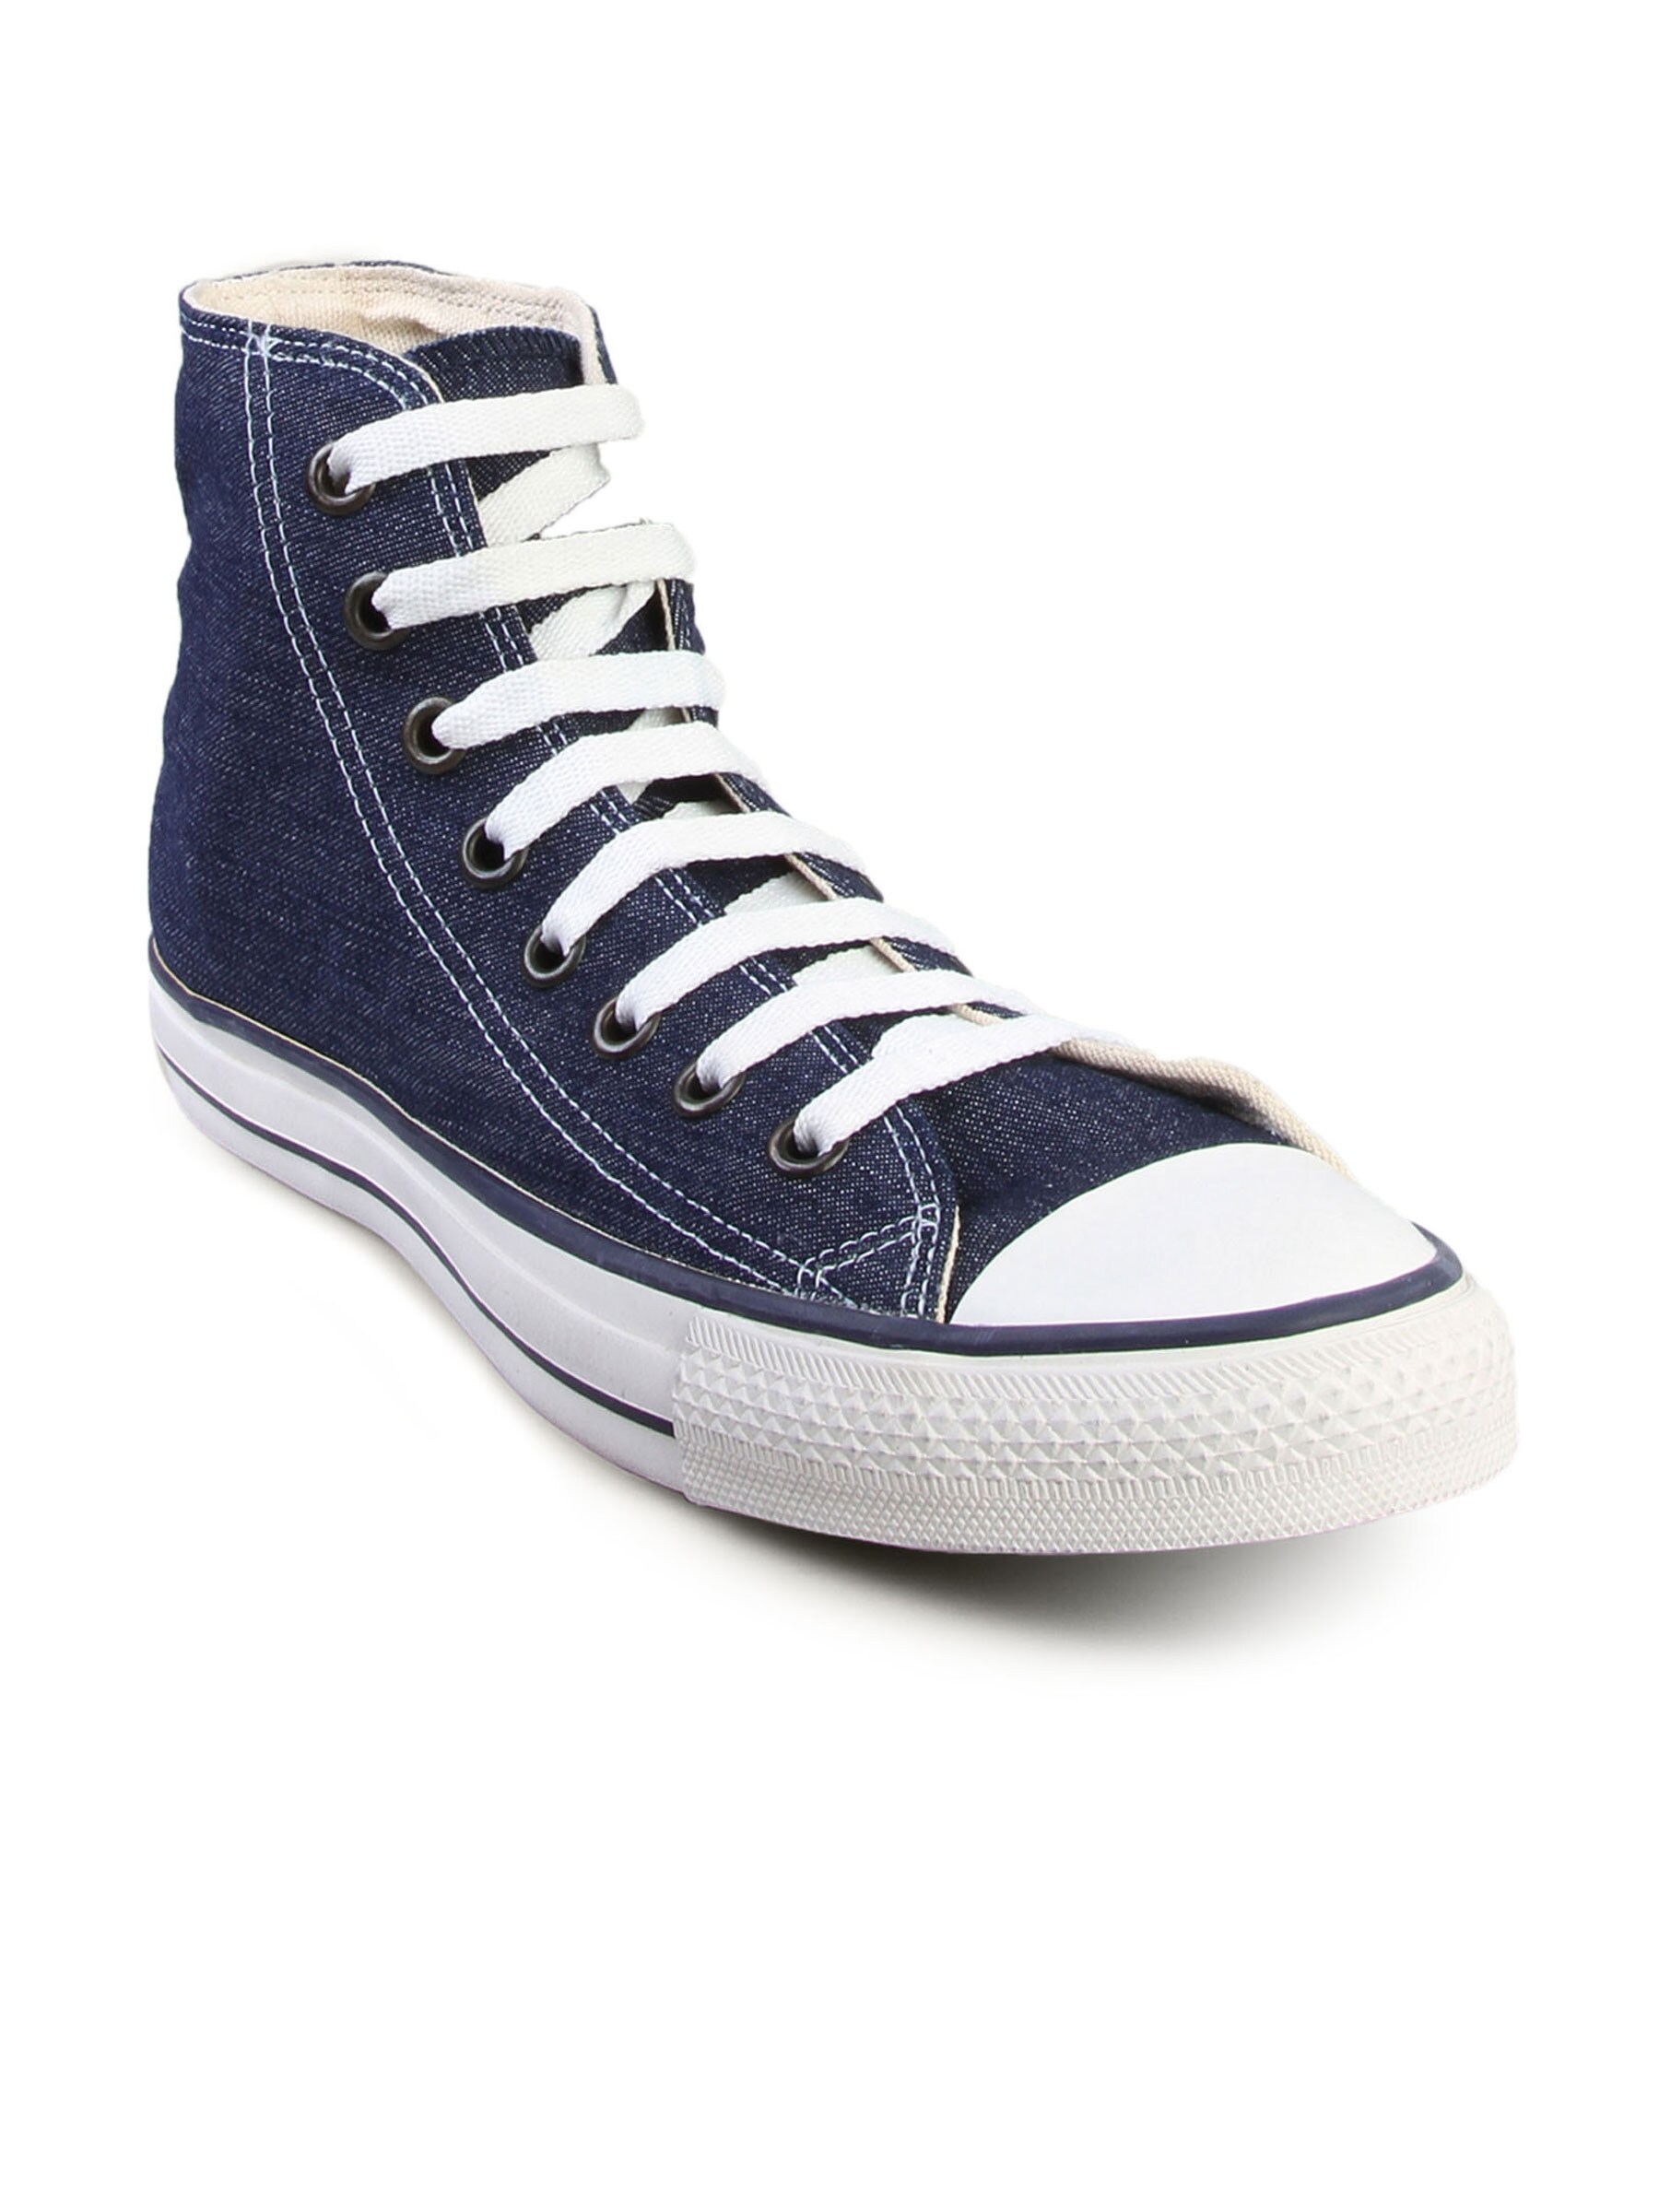 Converse Men's All Star HI Navy Blue Canvas Shoe